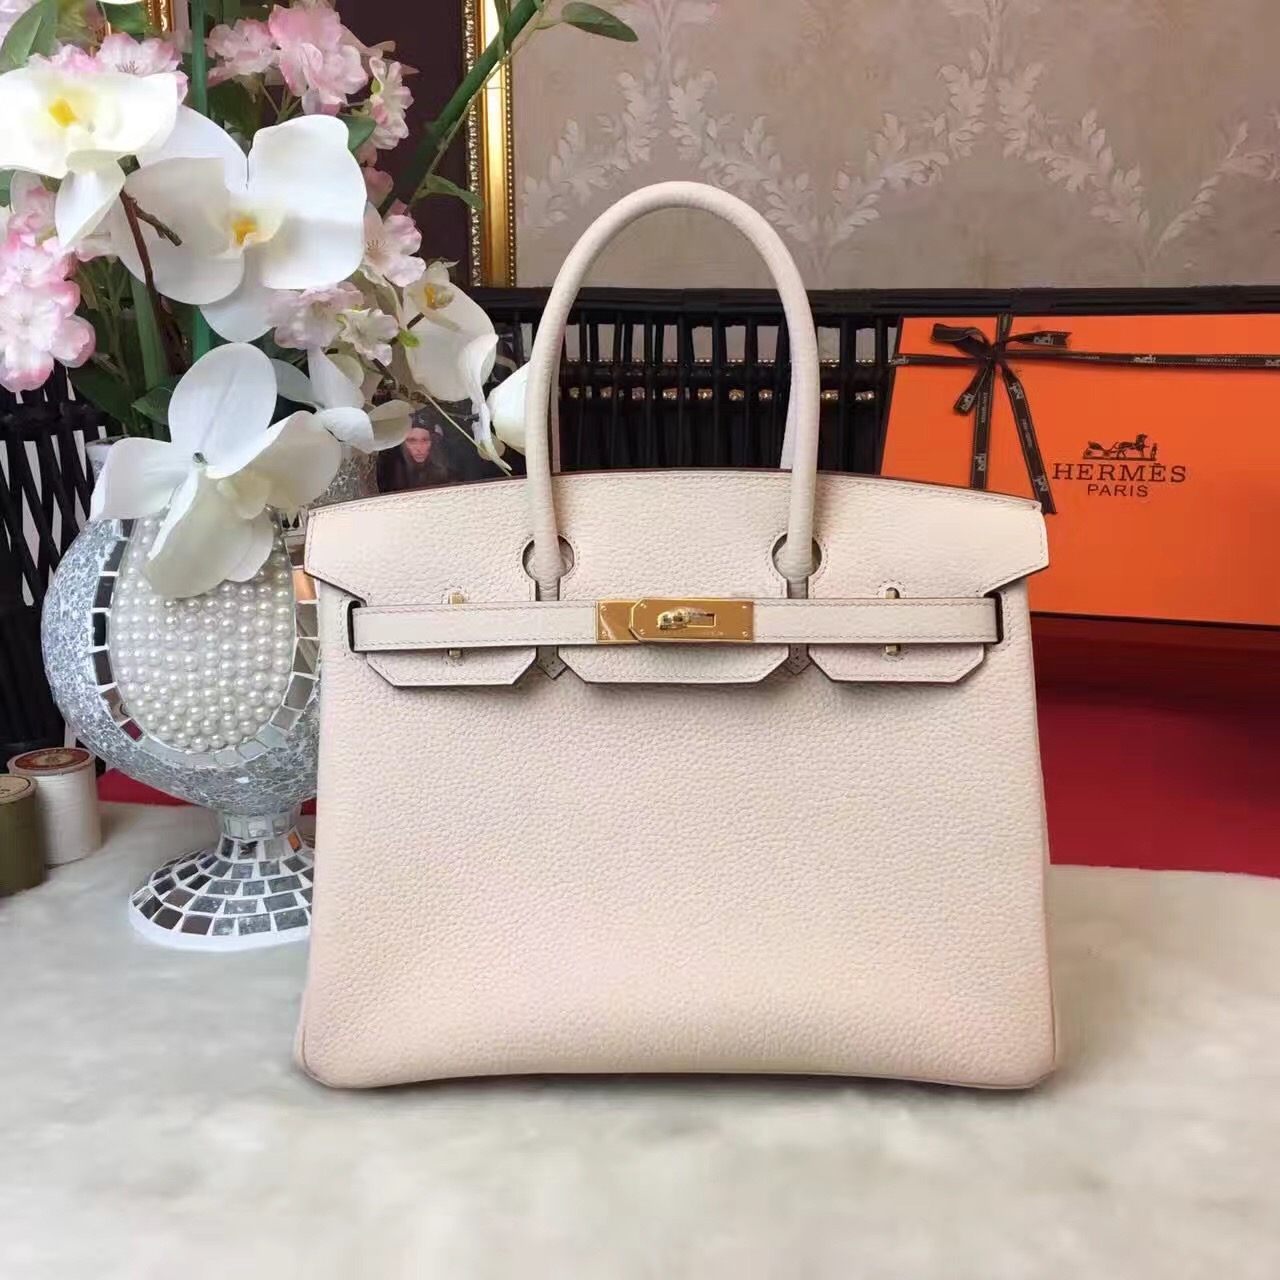 Hermes top leather cream Birkin handbags